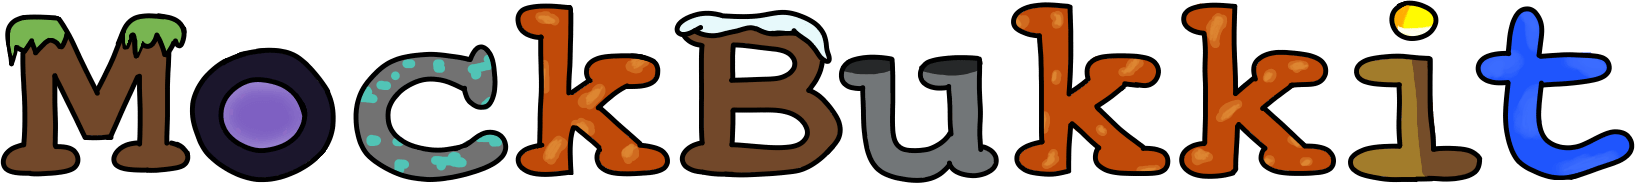 MockBukkit logo (design by HuffleAnimations)